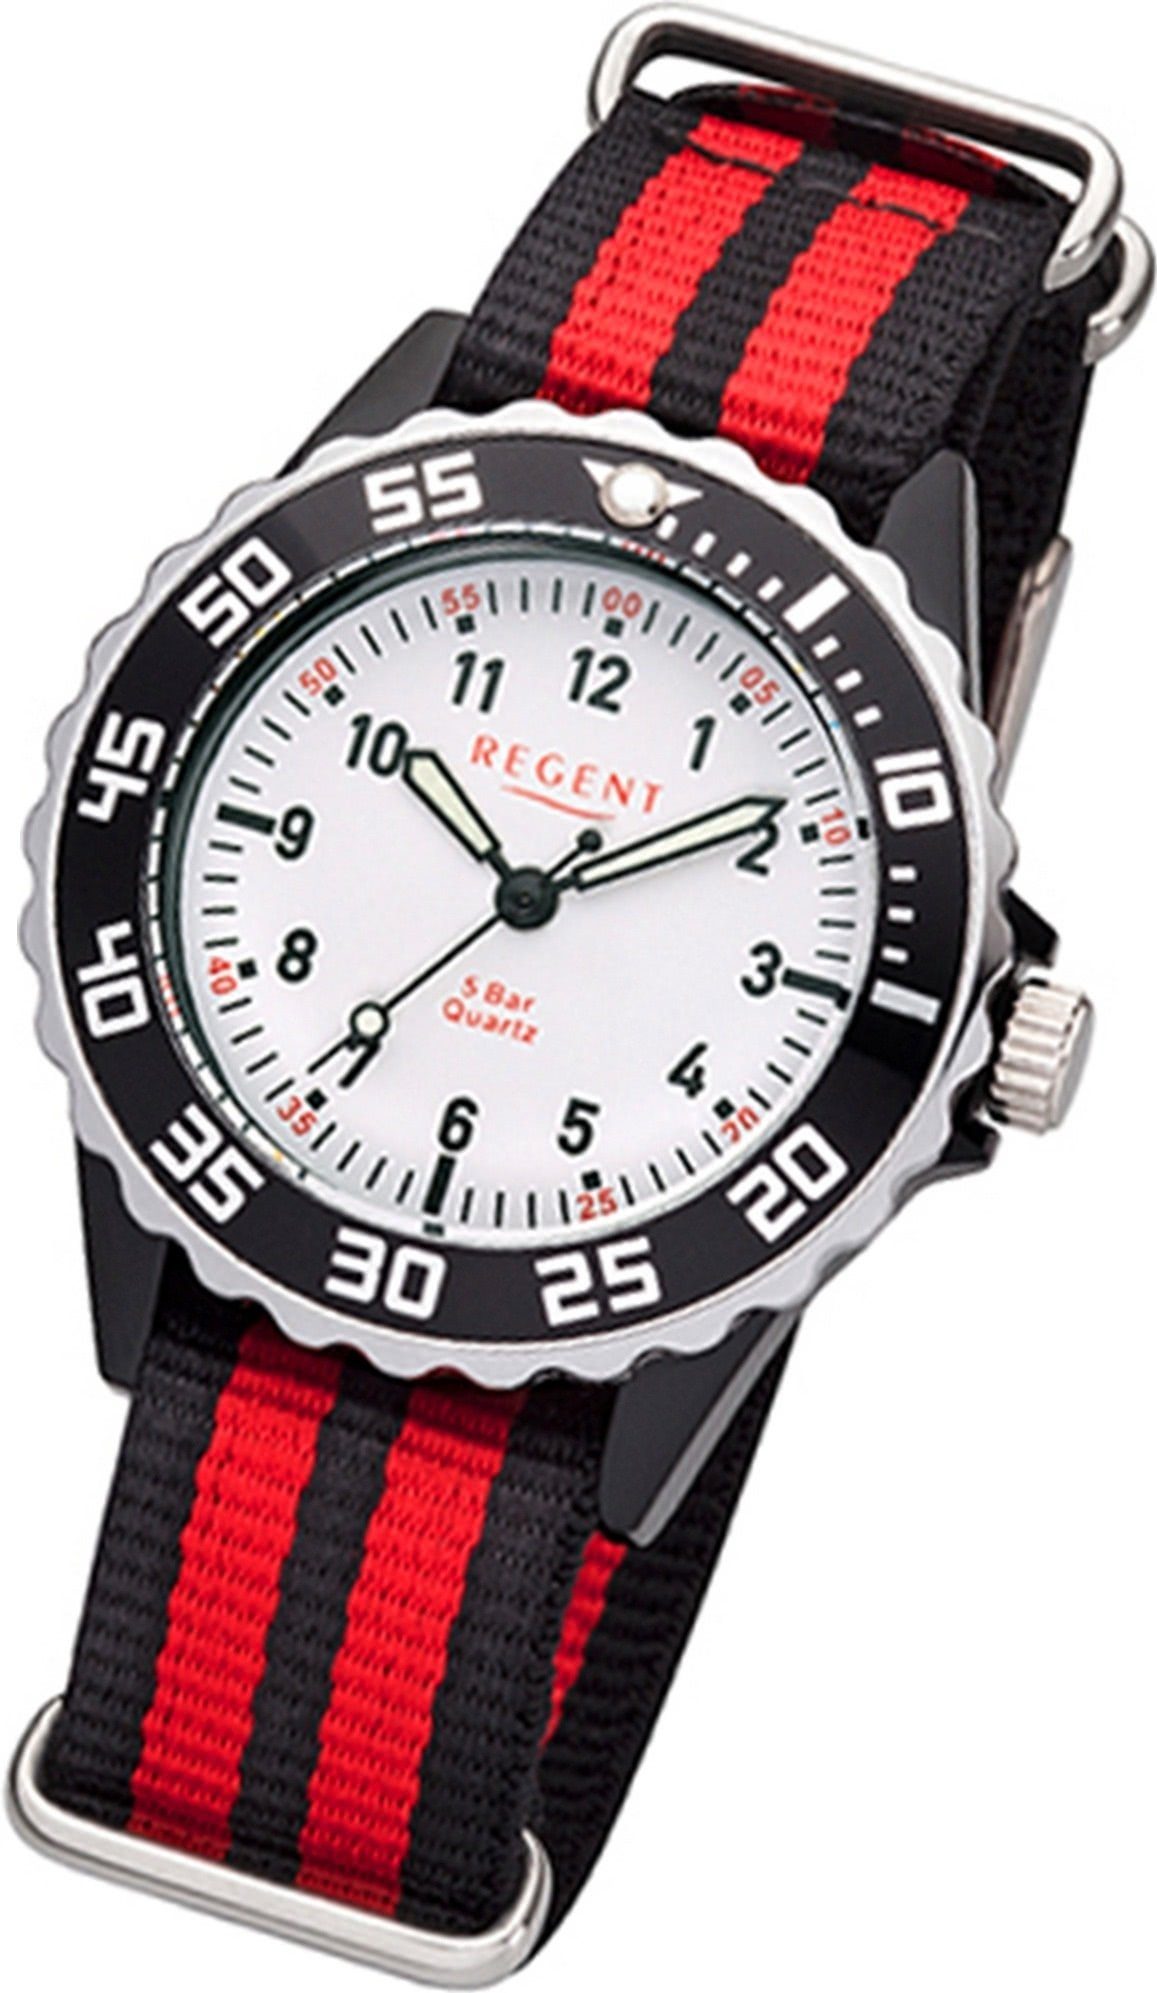 Regent Quarzuhr Regent Textil Kinder-Jugend Uhr F-1205, Kinderuhr Textilarmband rot, schwarz, rundes Gehäuse, mittel (35mm)